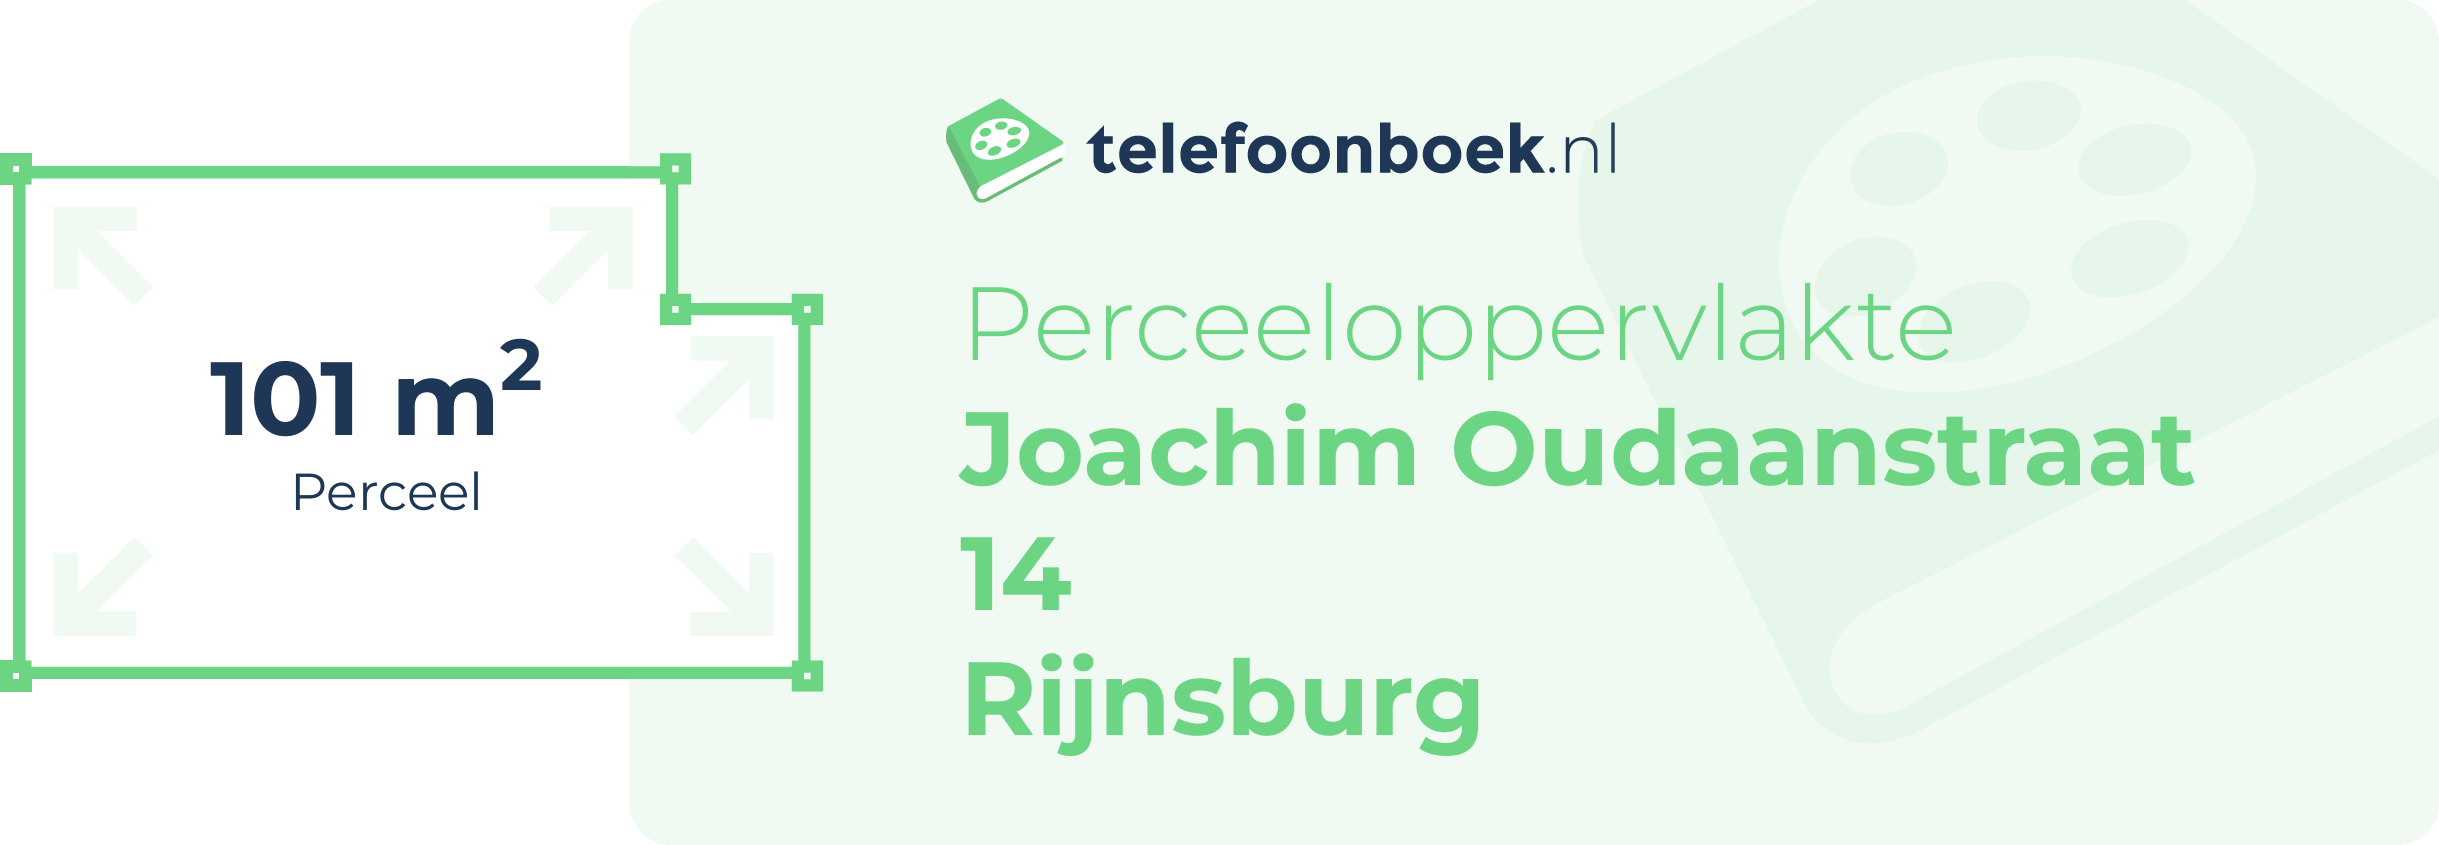 Perceeloppervlakte Joachim Oudaanstraat 14 Rijnsburg